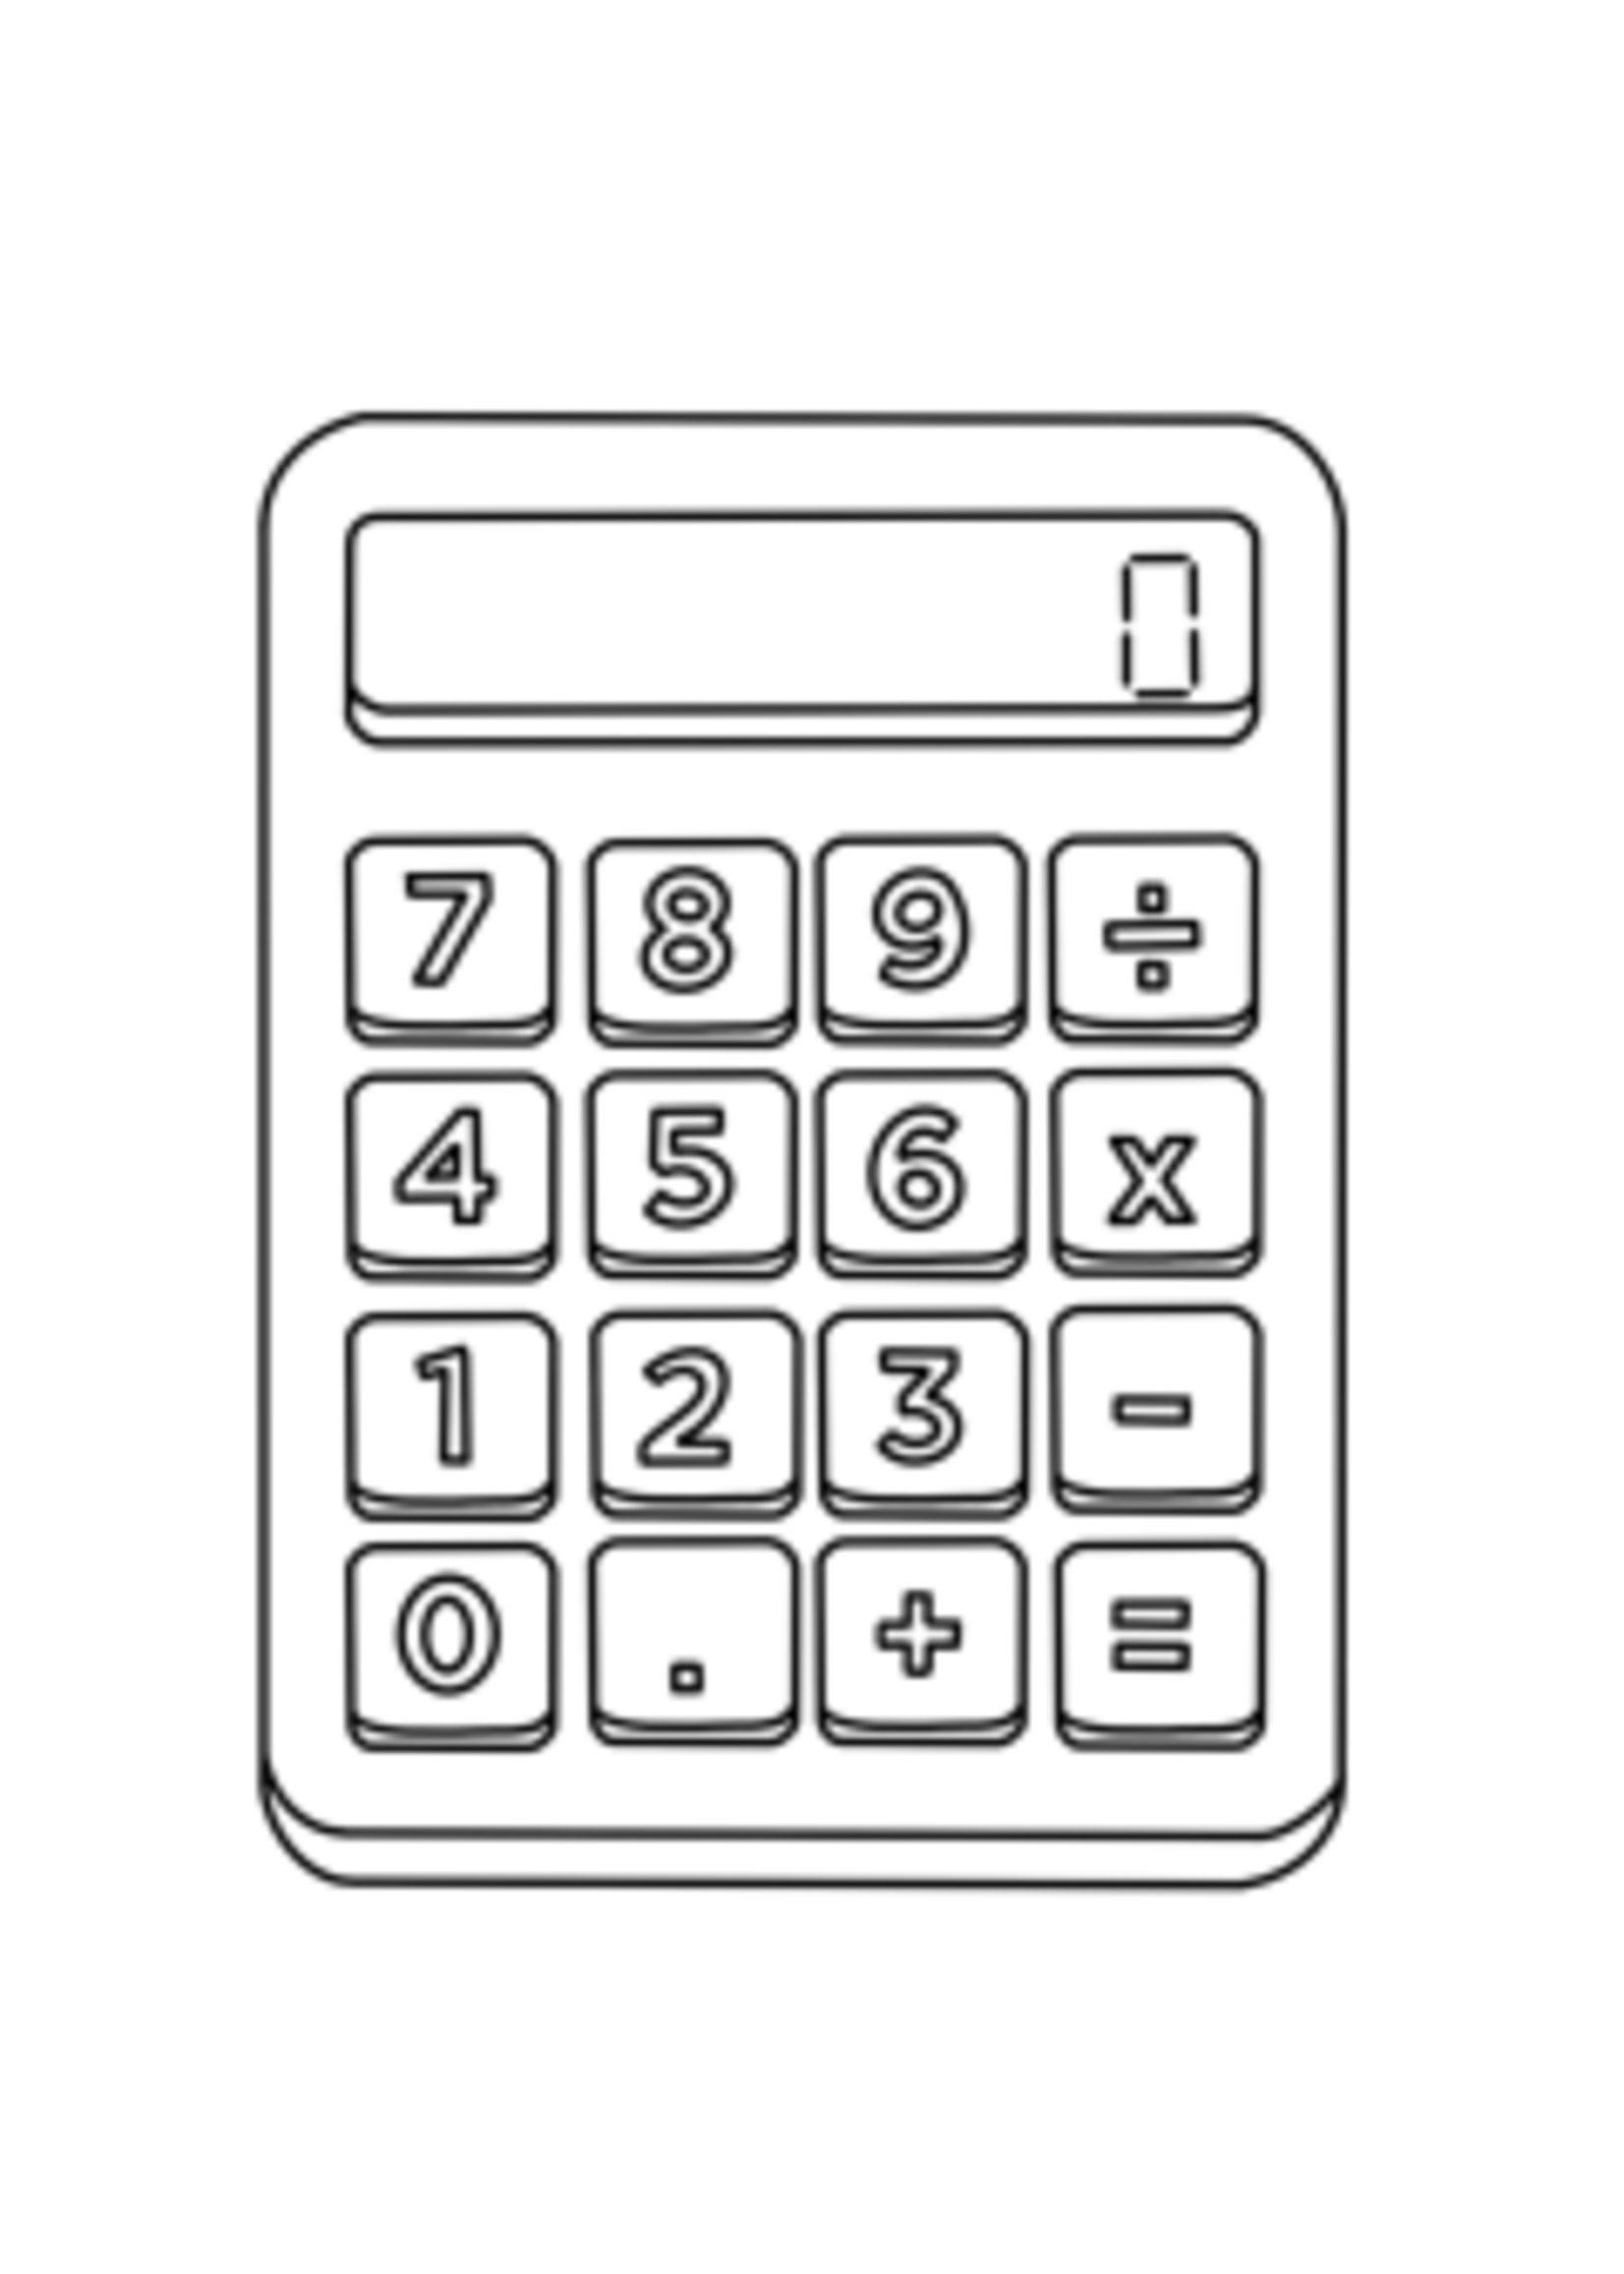 NON-UNIFORM CALCULATOR - Saint Andrew Kiosk Calculator - Misc. Products